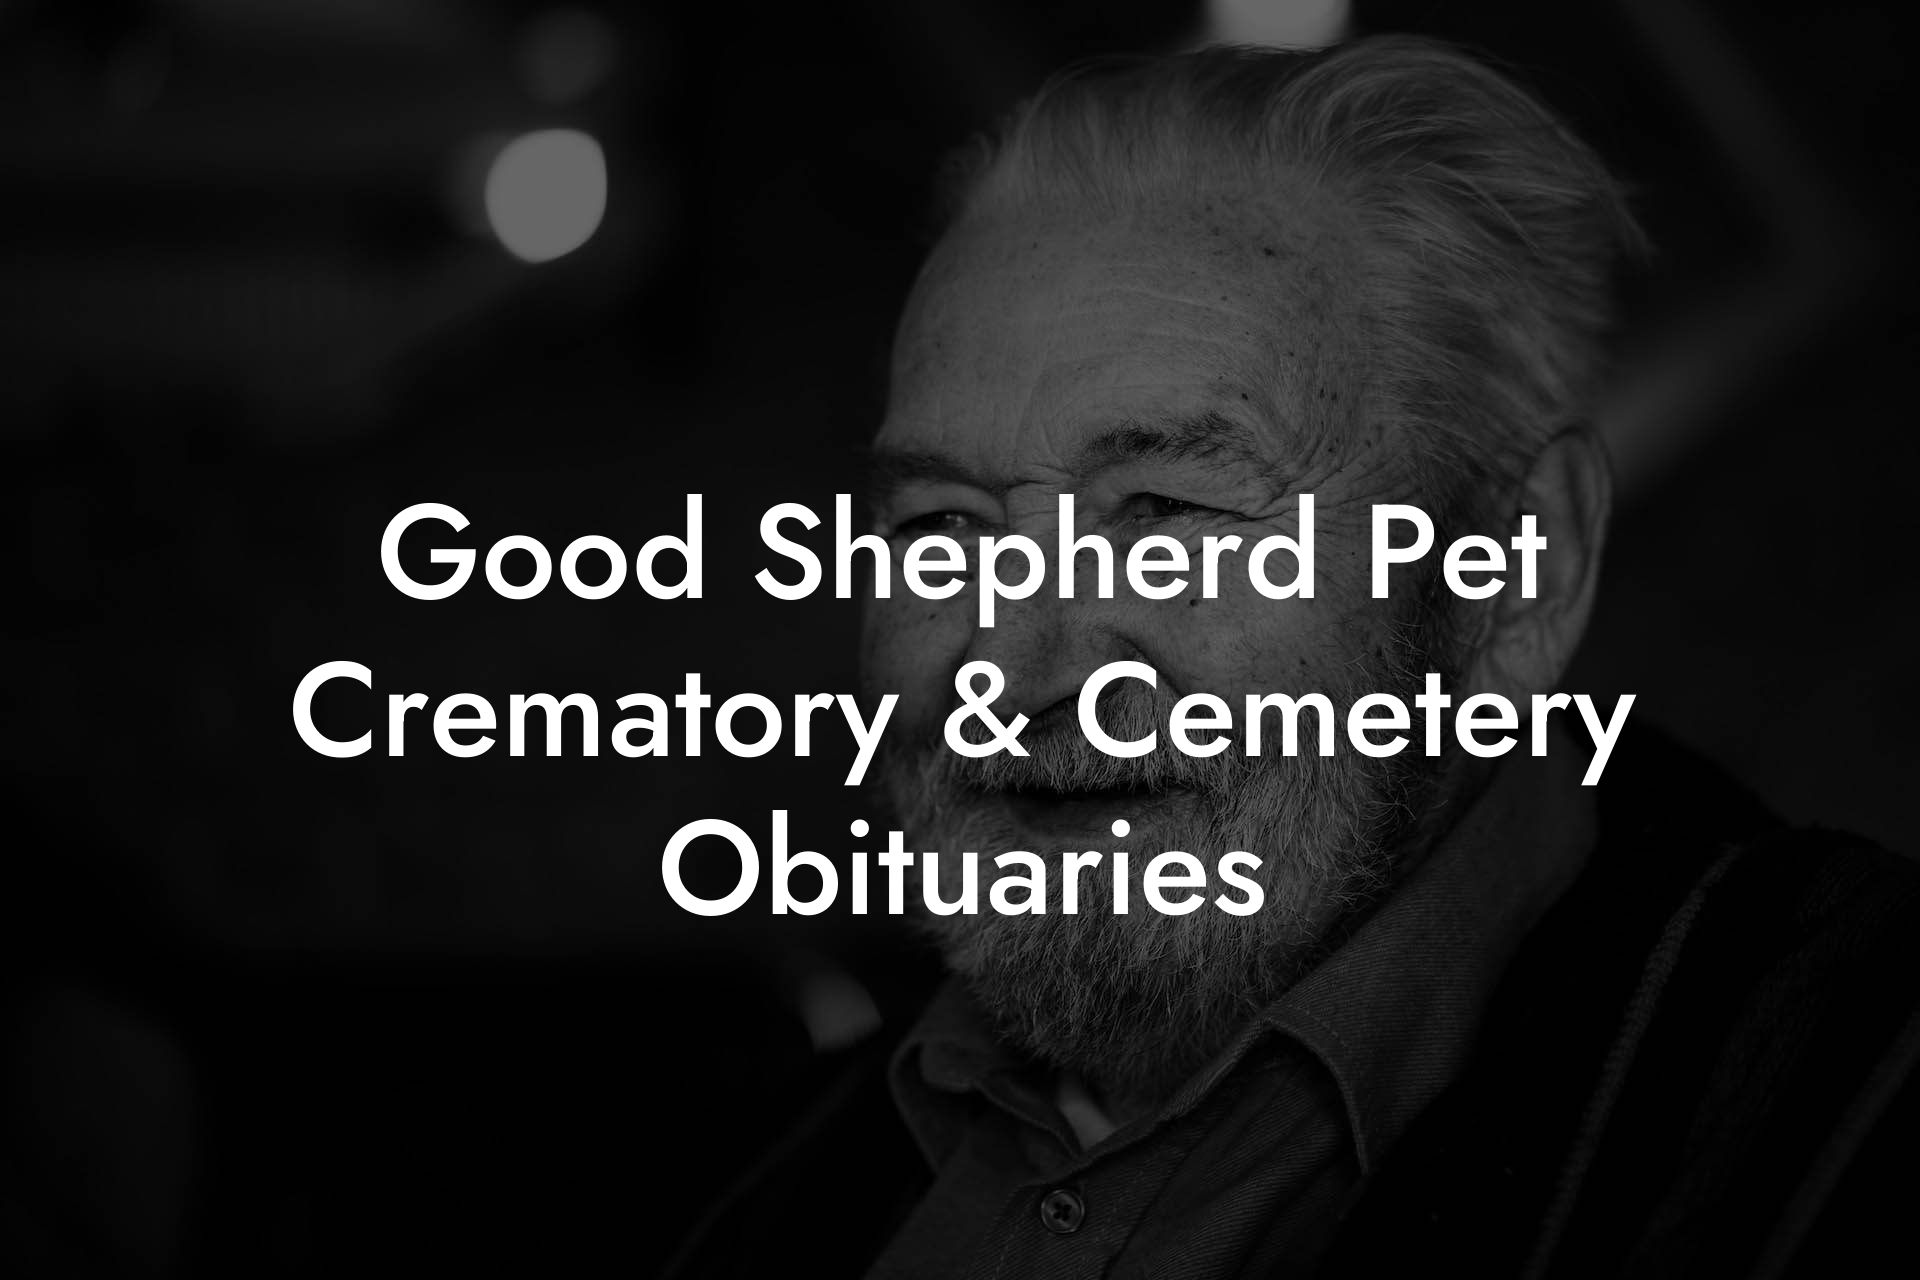 Good Shepherd Pet Crematory & Cemetery Obituaries